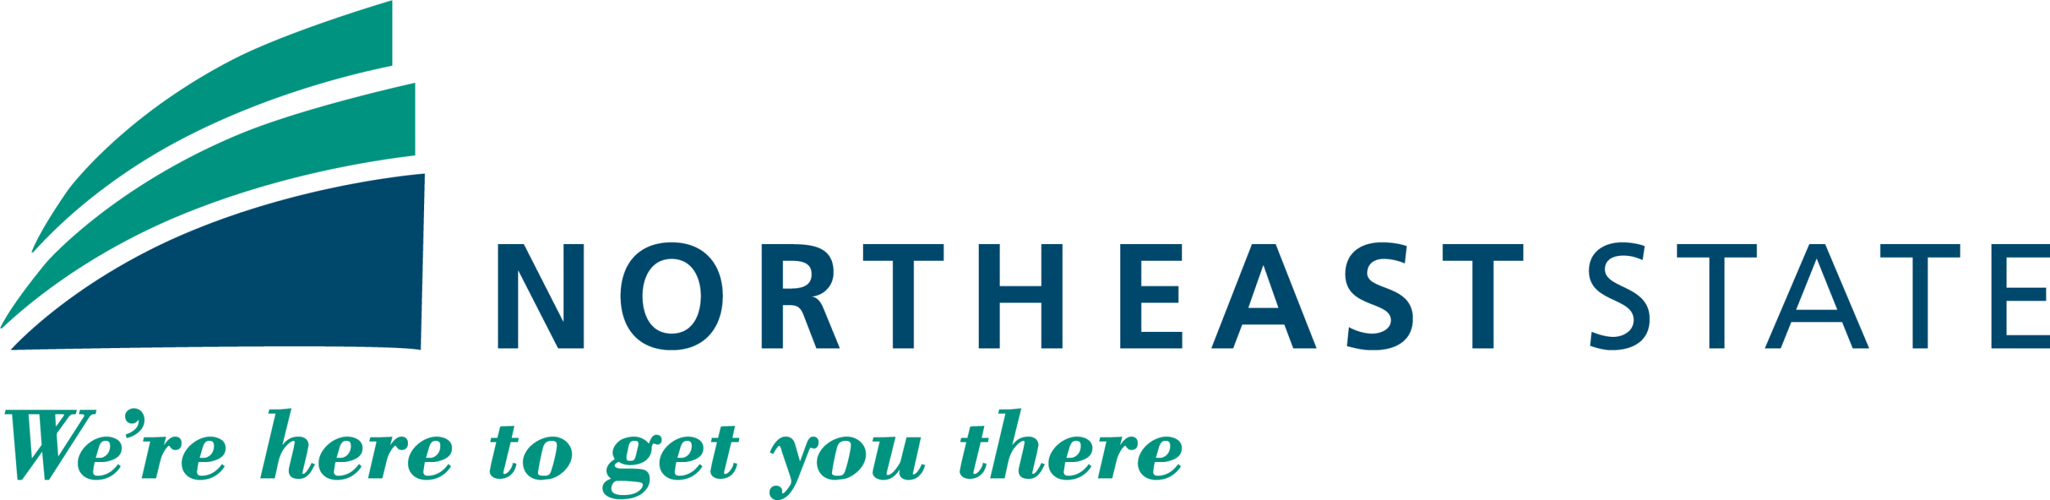 Northeast State logo